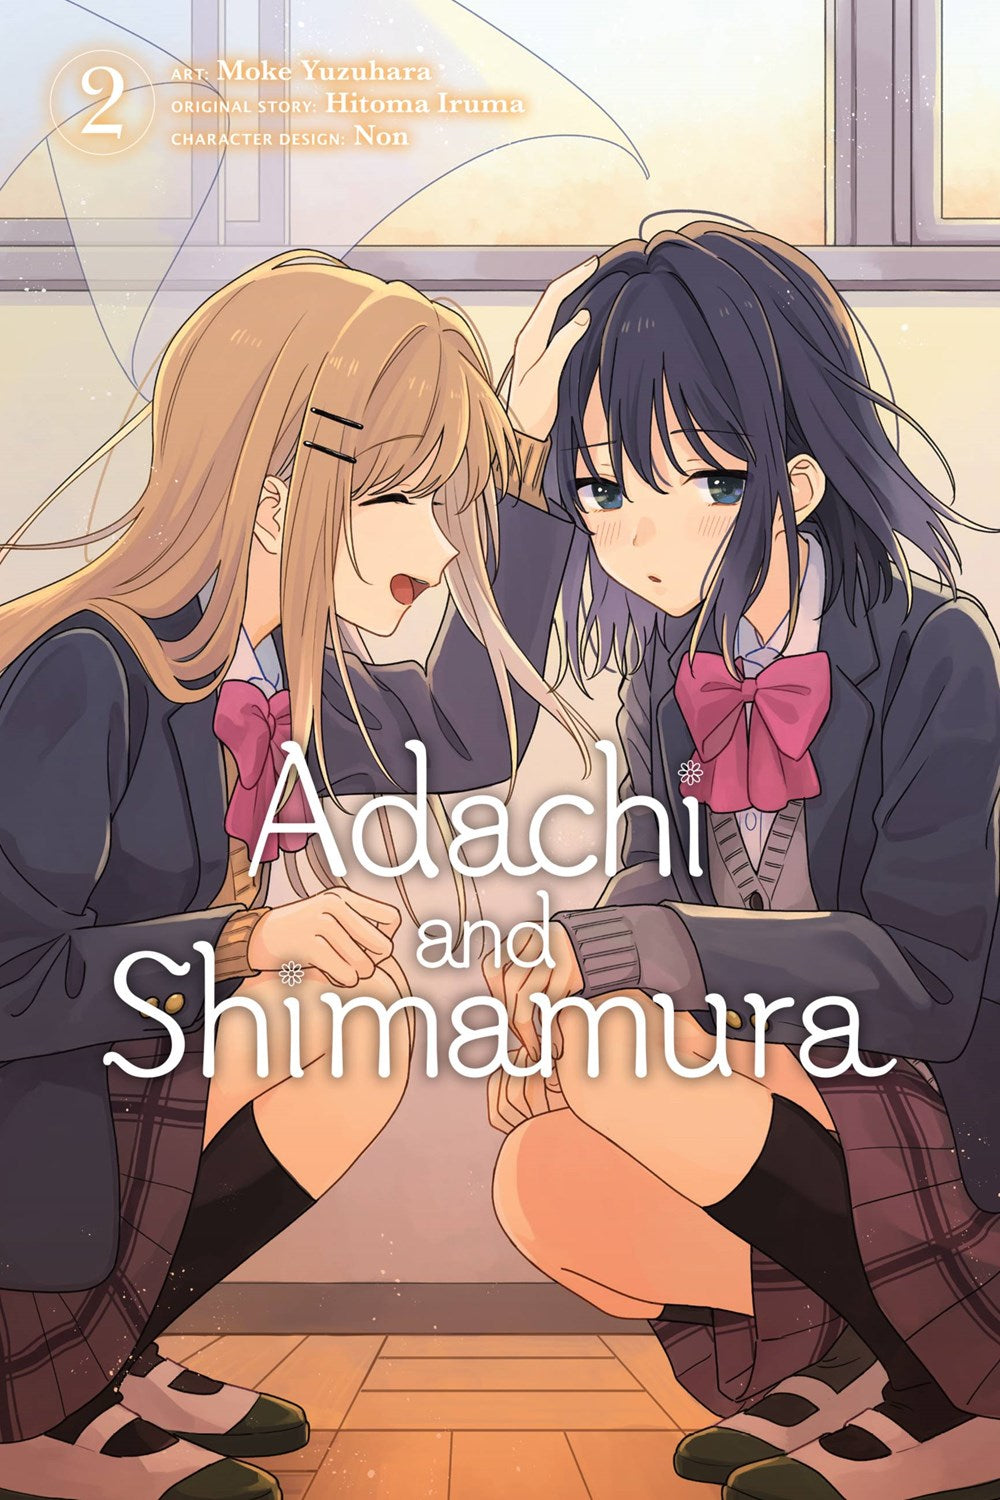 Adachi and Shimamura, manga Vol. 02